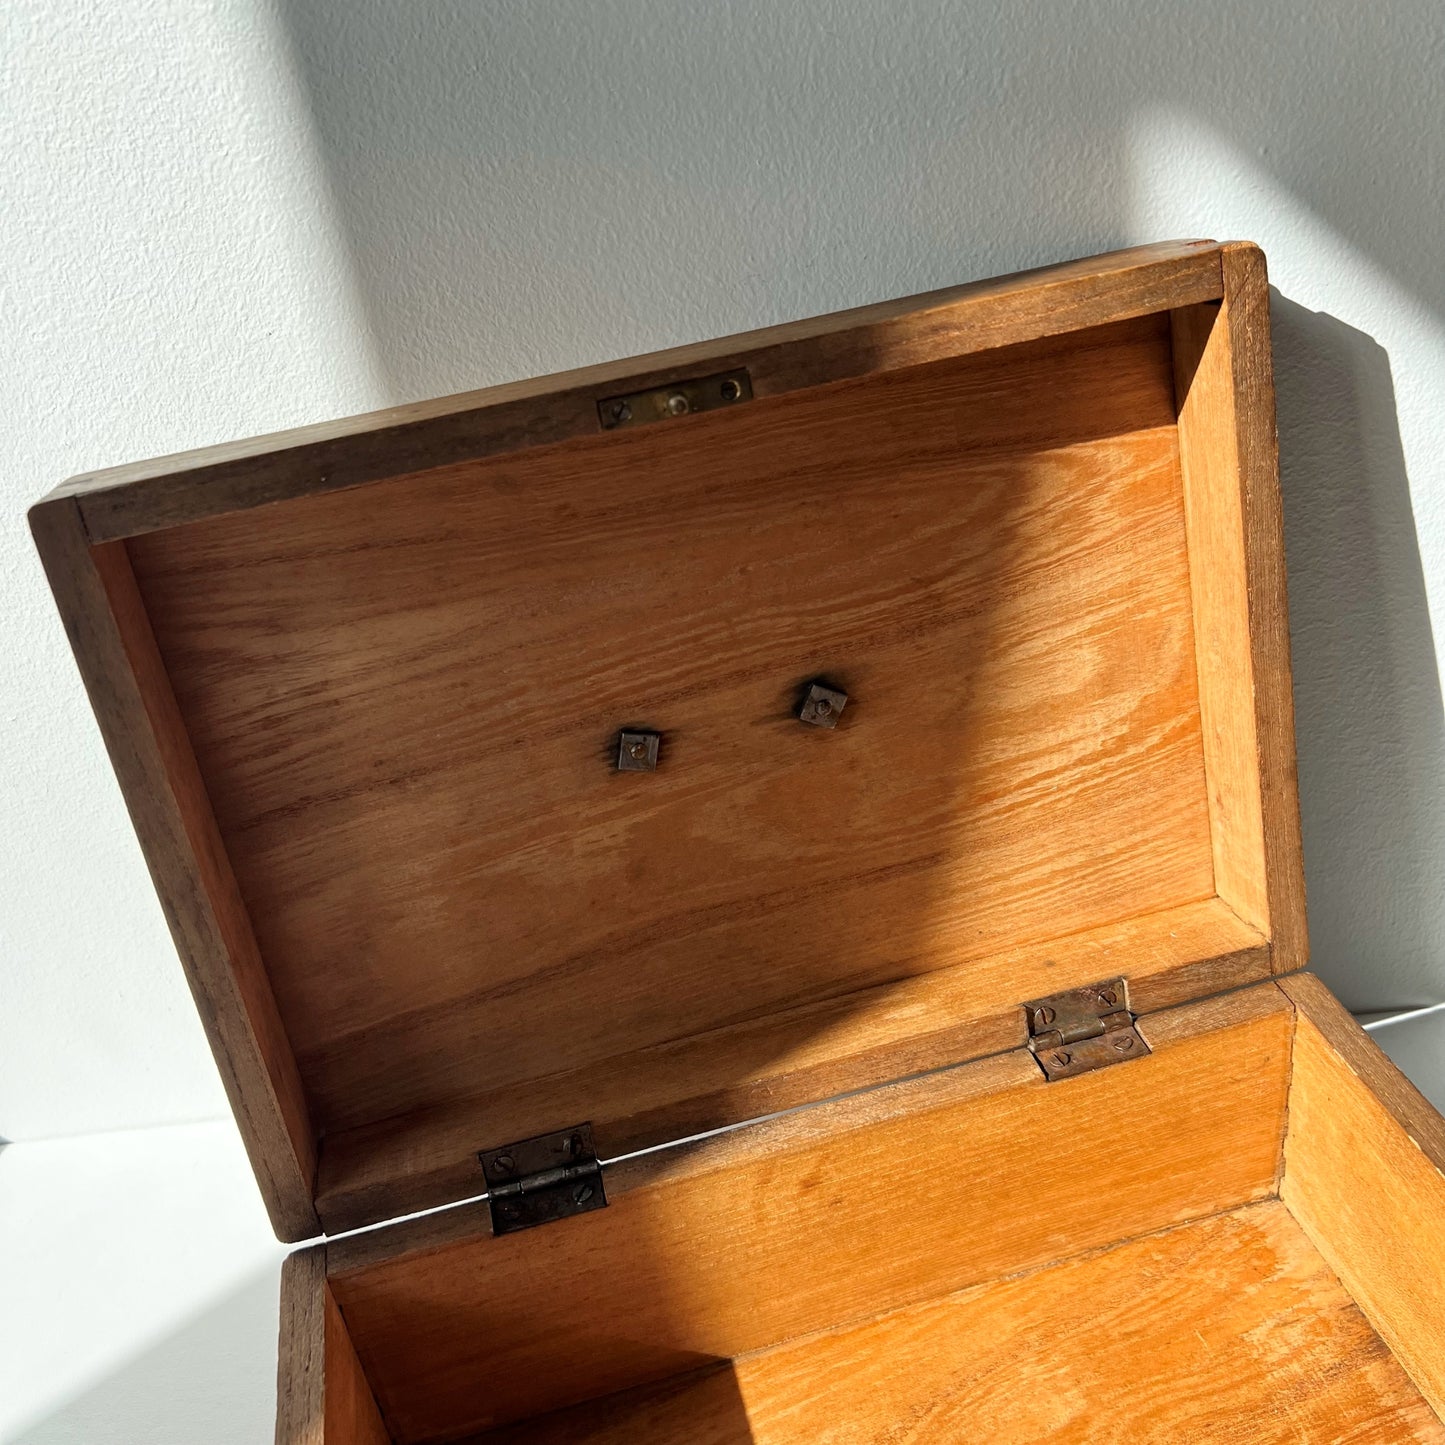 【Vintage】UK - 1930s Ribbon Motif Wooden Box